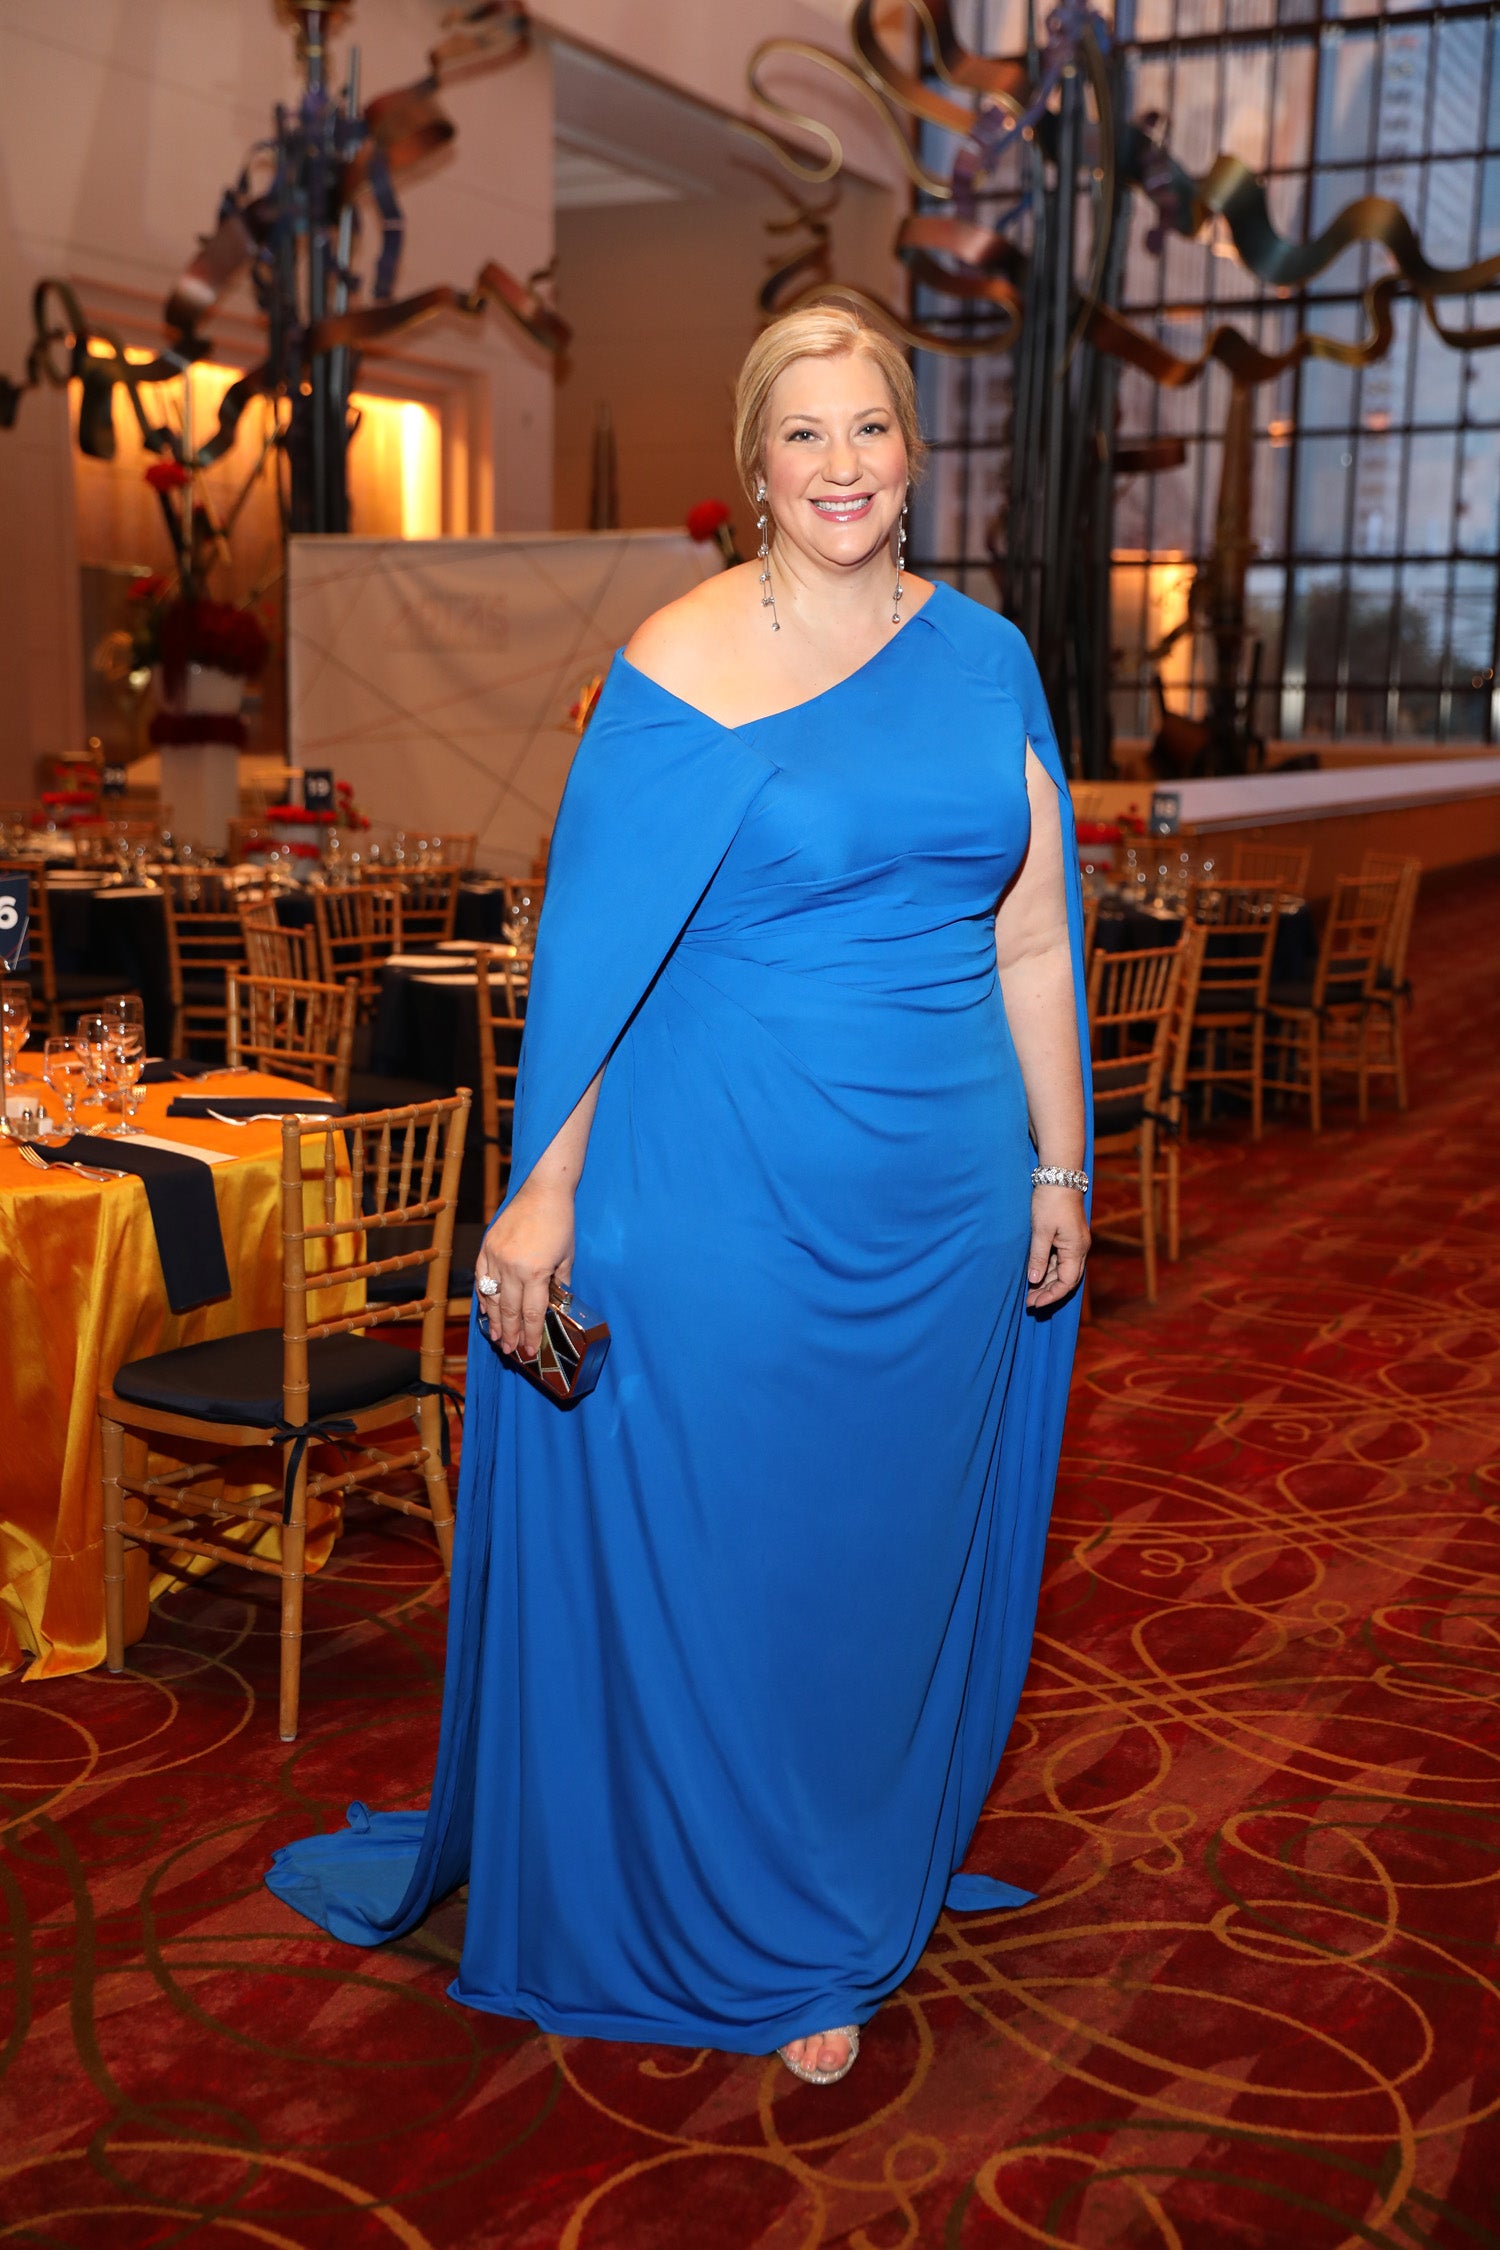 Caroline Looke Benak, a bride in her custom designed blue one shoulder Texas chic rehearsal dinner gown by David Peck, posing at her venue in Houston Oaks.